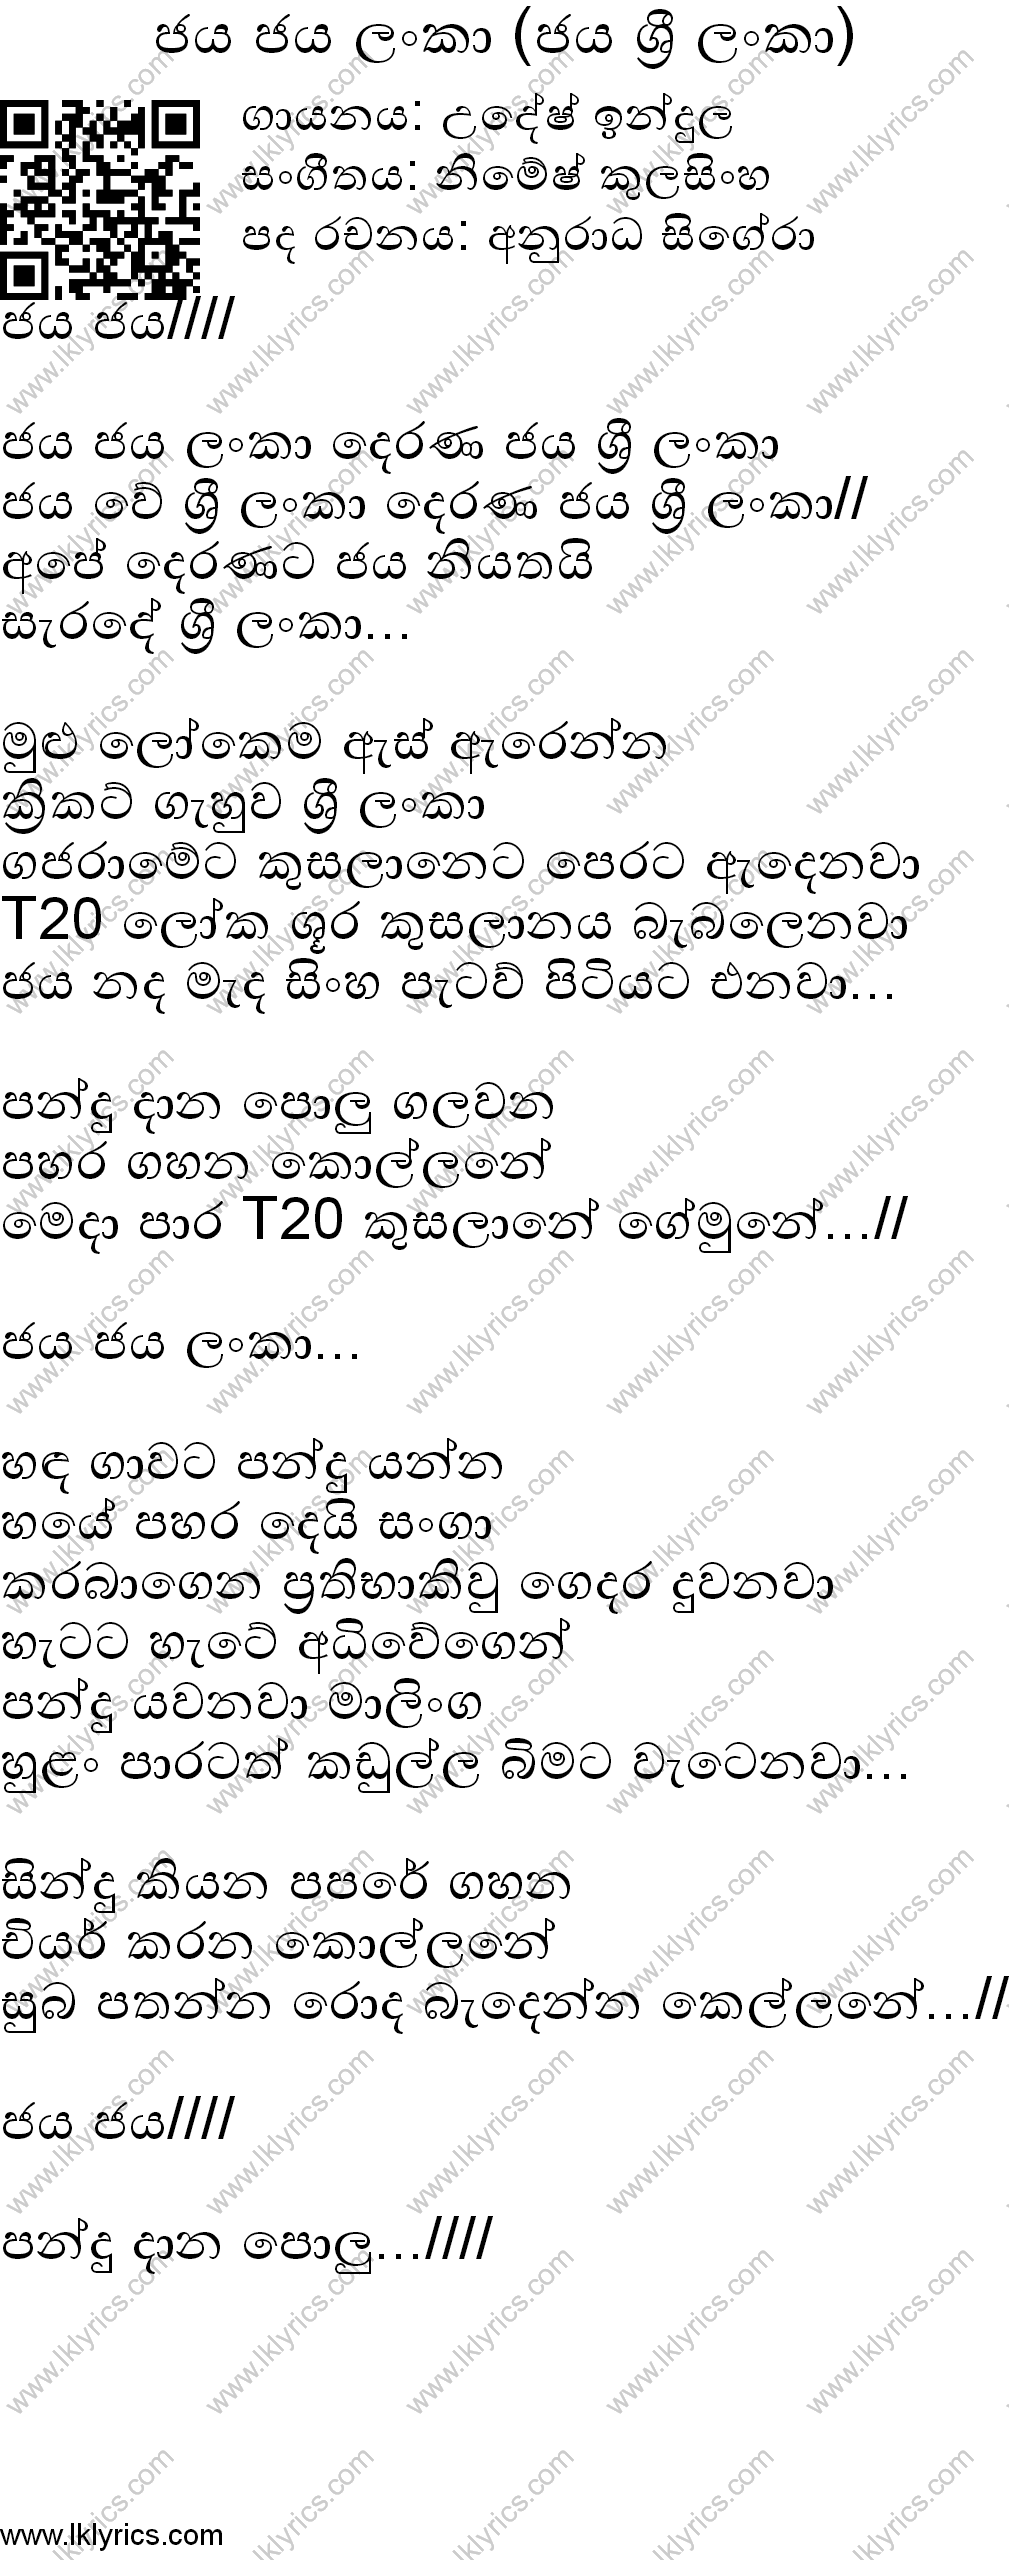 Jaya Jaya Lanka (Jaya Sri Lanka) Lyrics - LK Lyrics